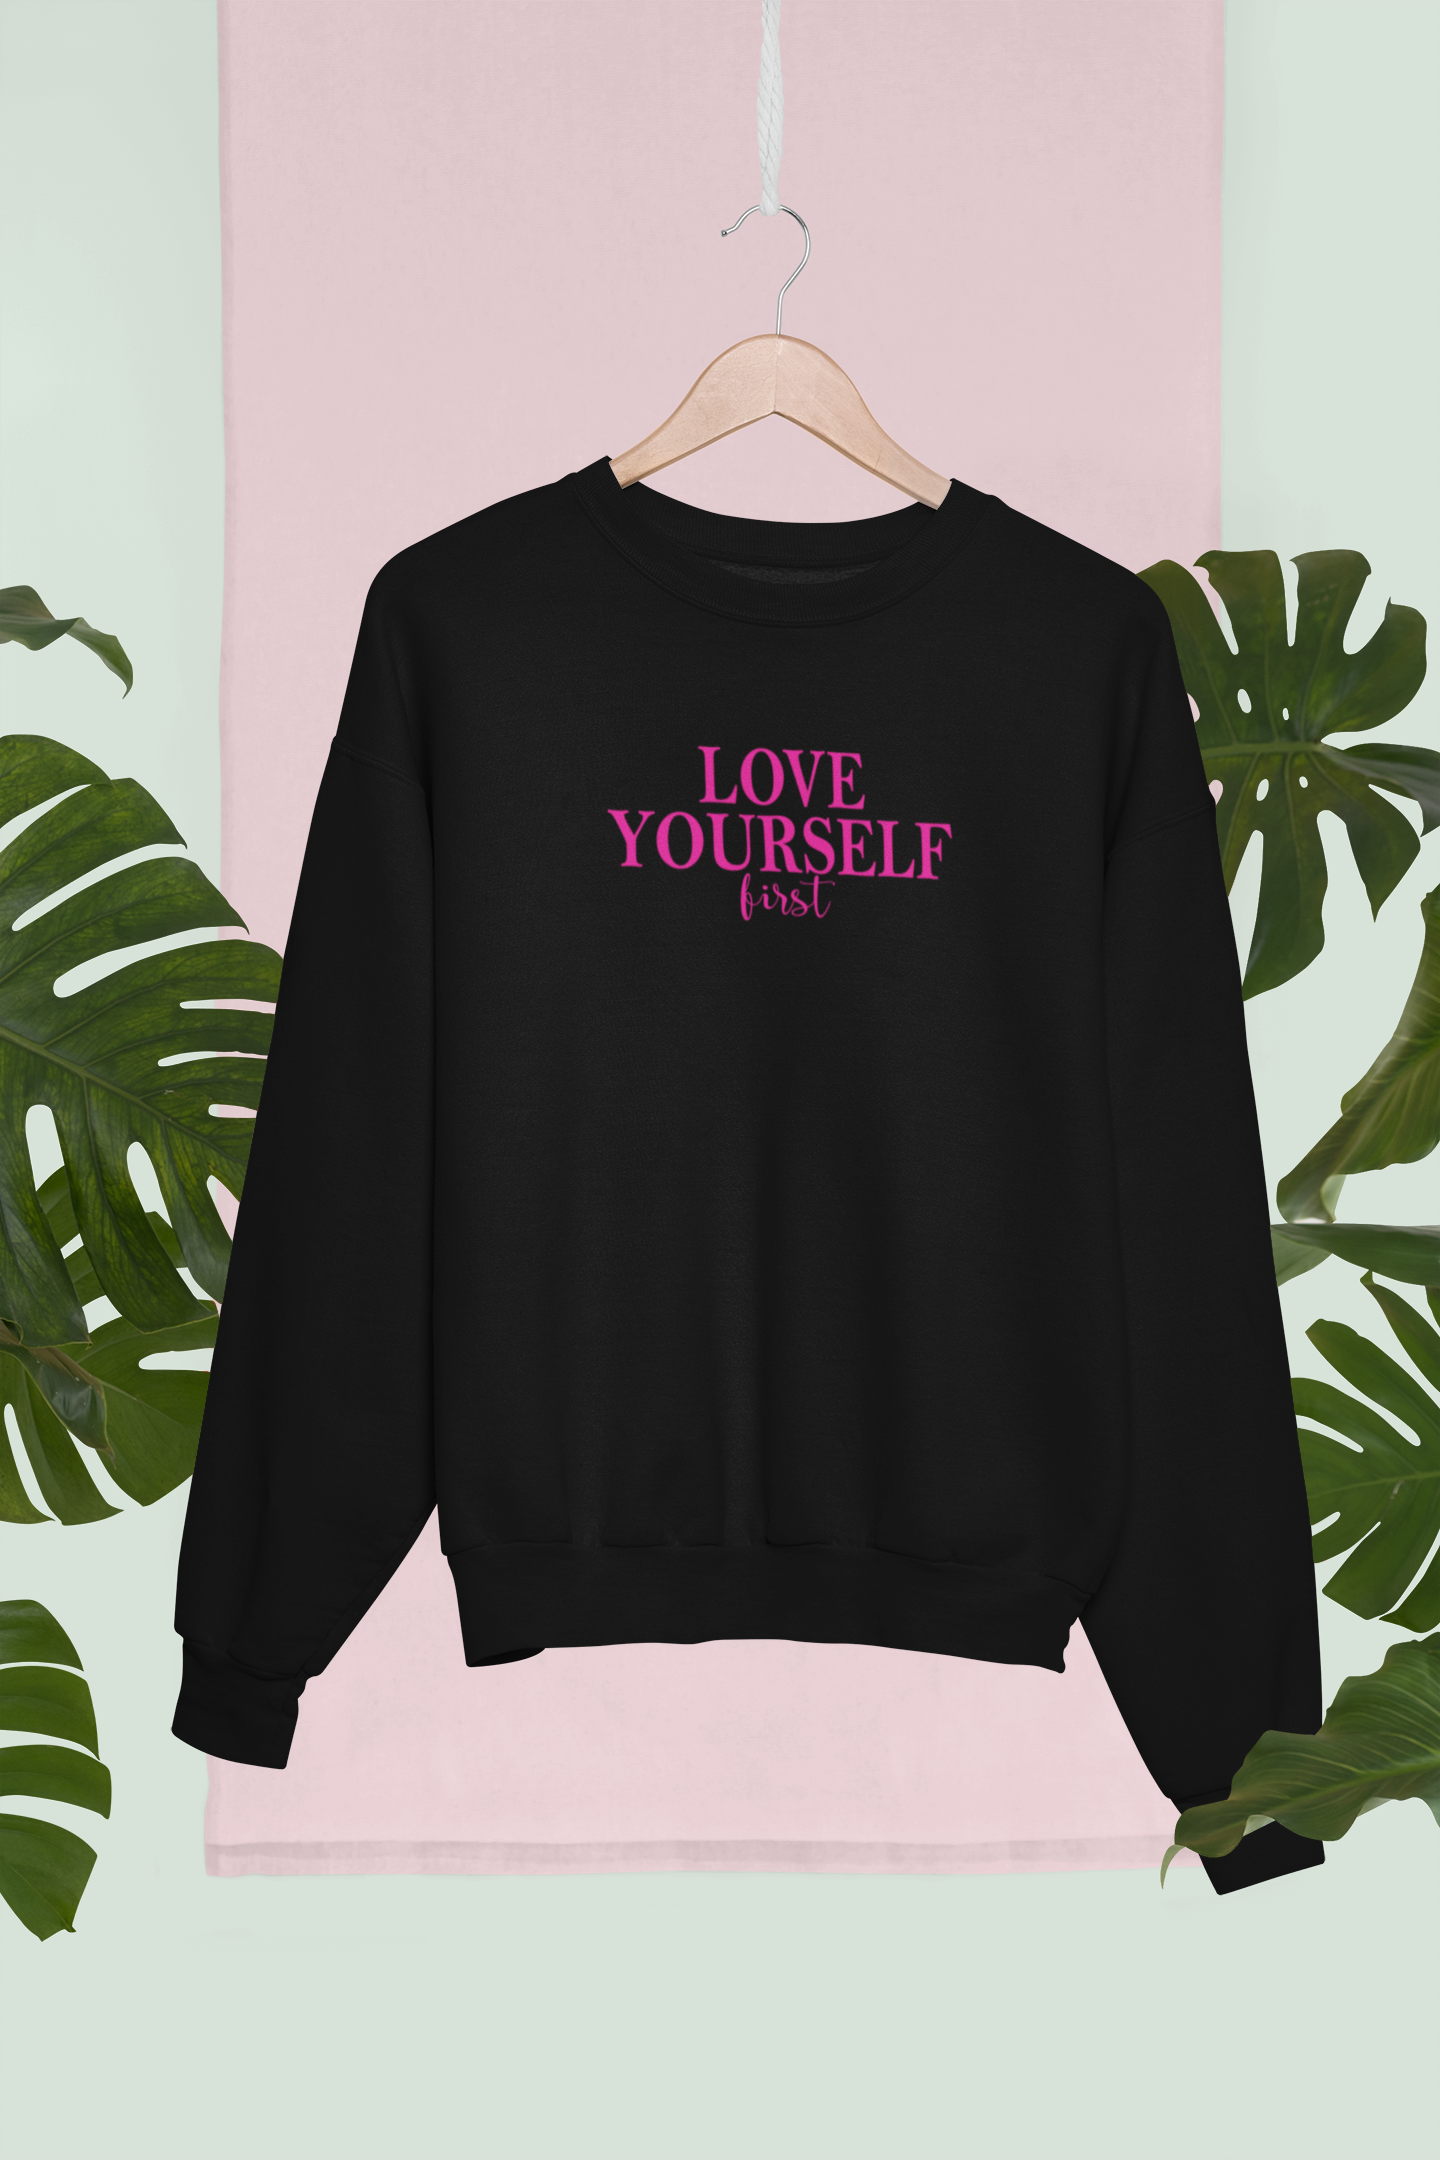 Love Yourself first Crewneck Sweatshirt